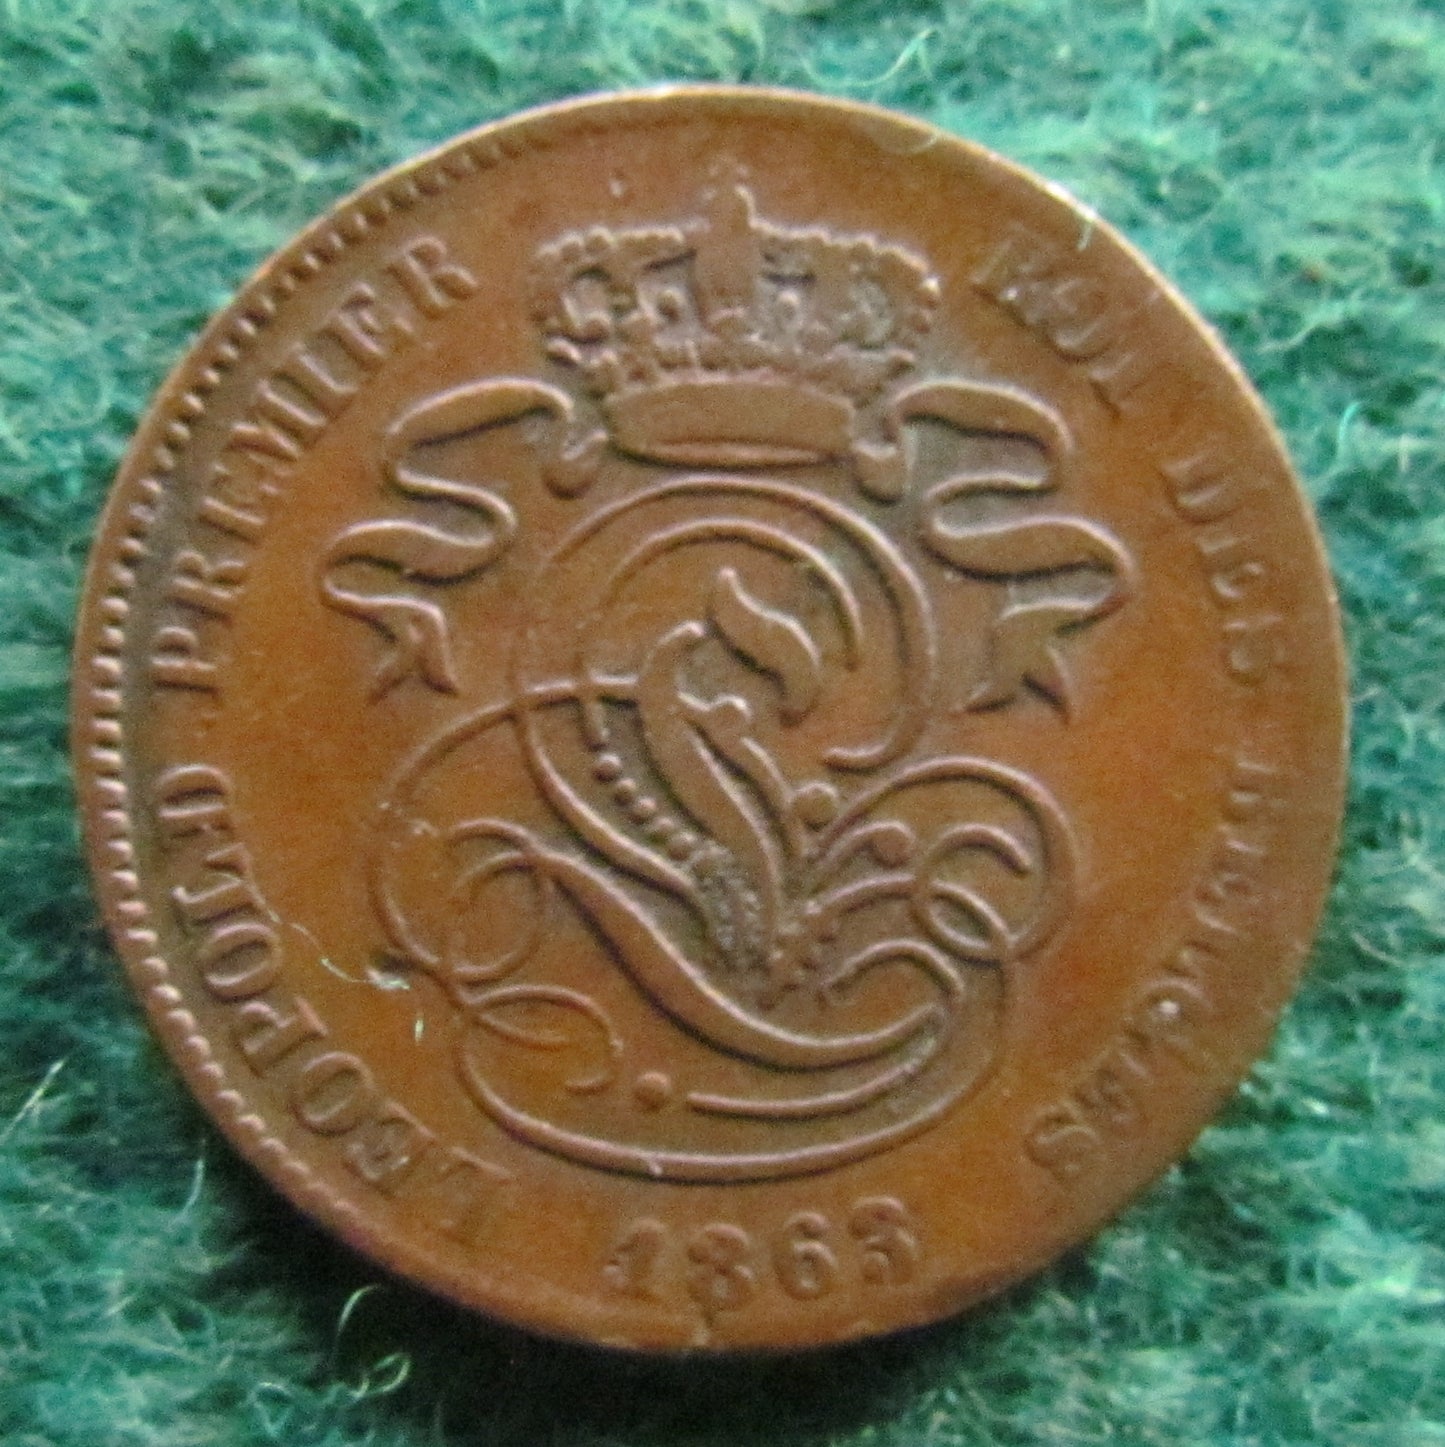 Belgium 1863 2 Centime Coin - Circulated